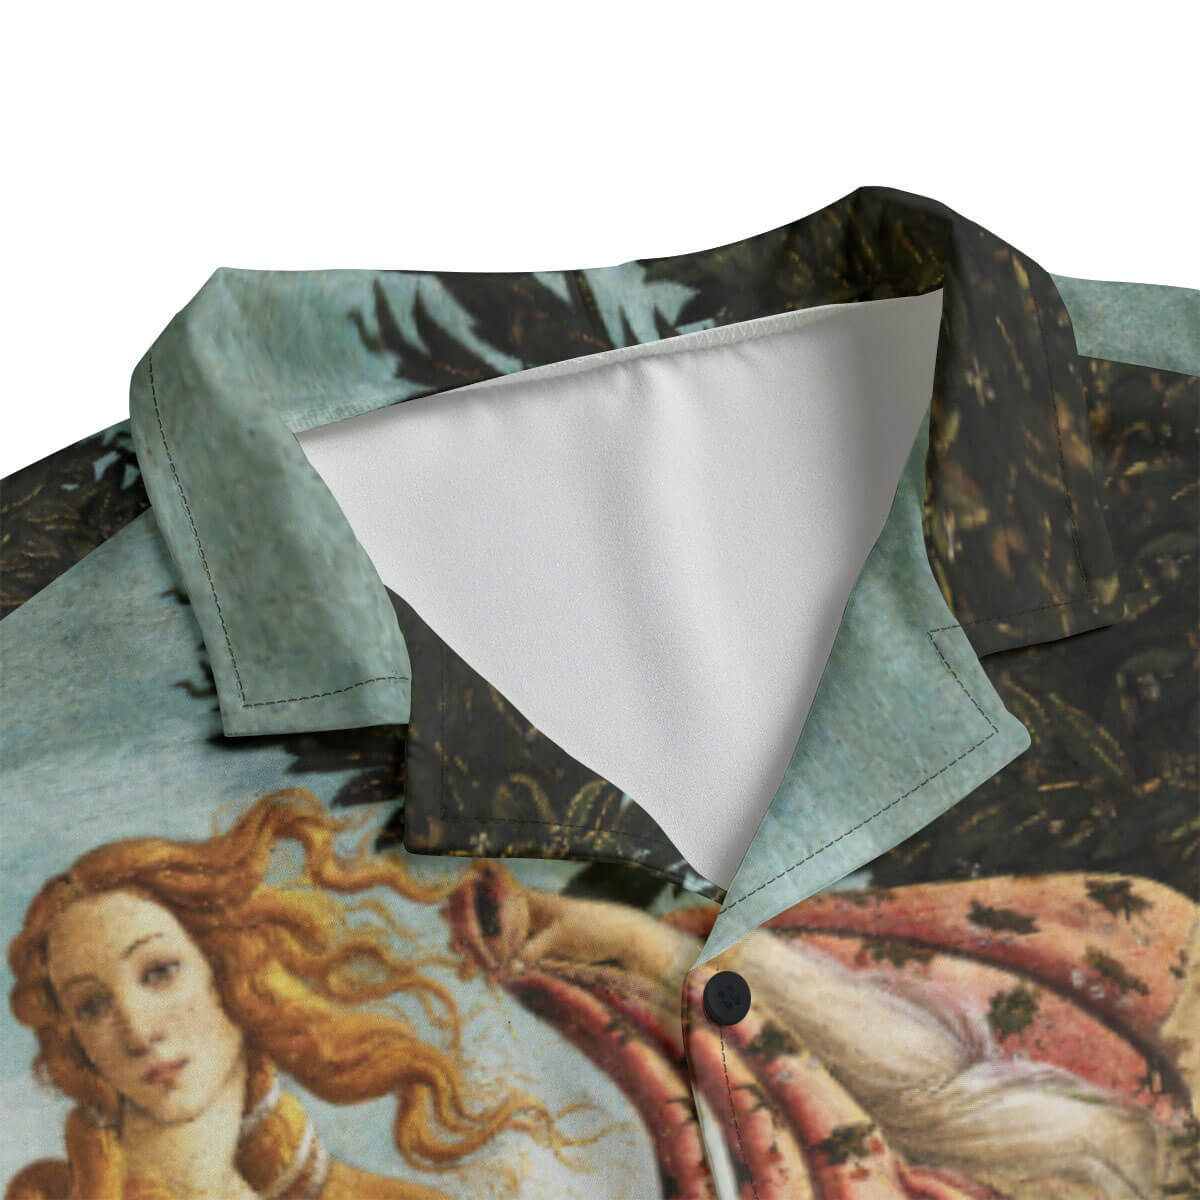 Birth of Venus shirt folded showing central print